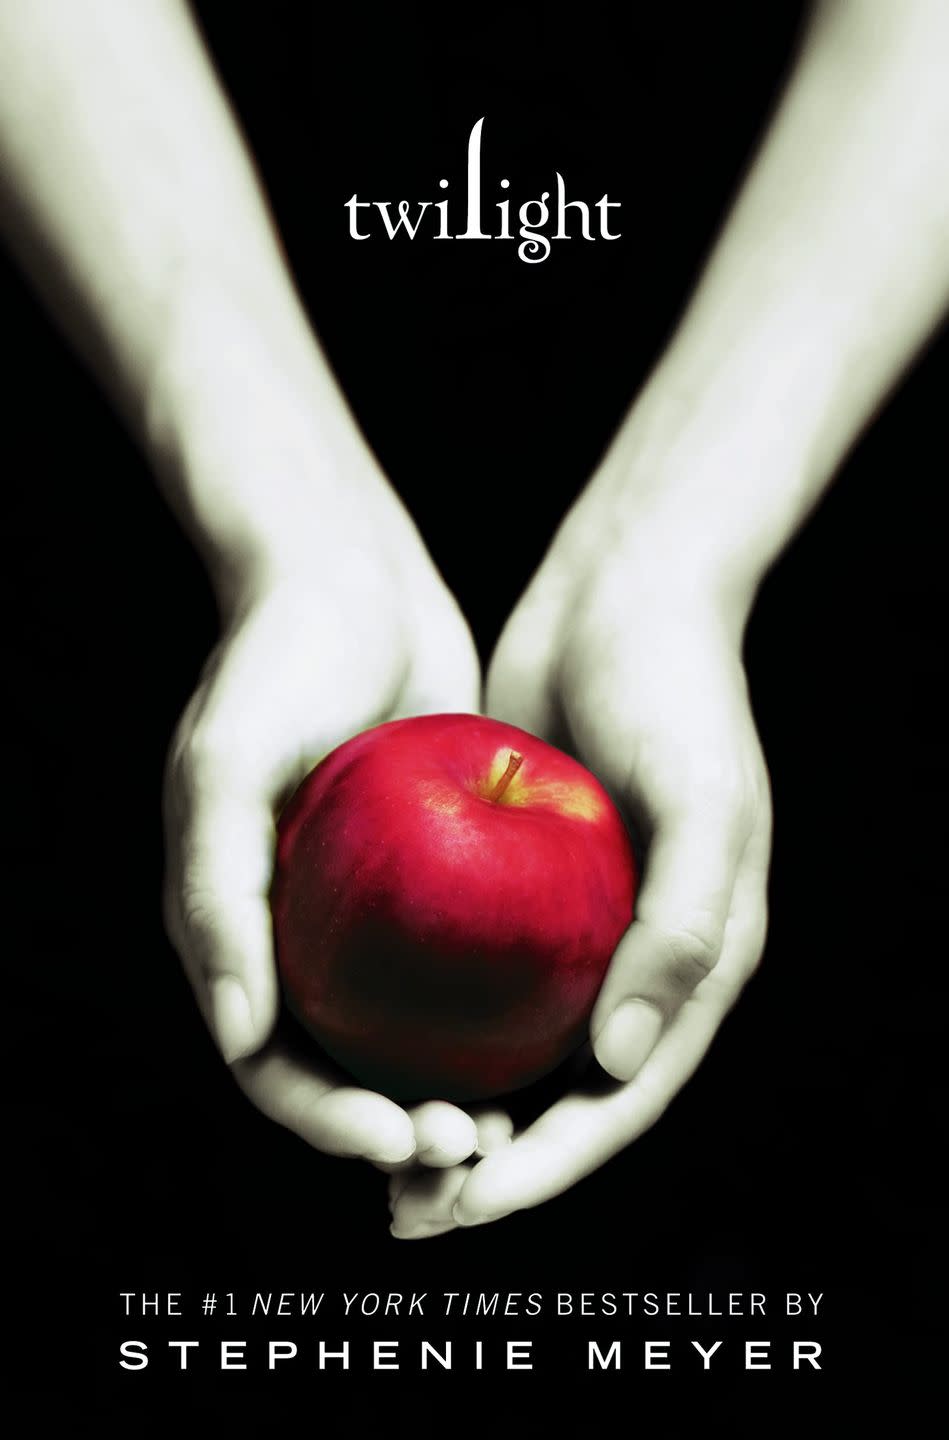 19) “Twilight” Saga by Stephanie Meyer